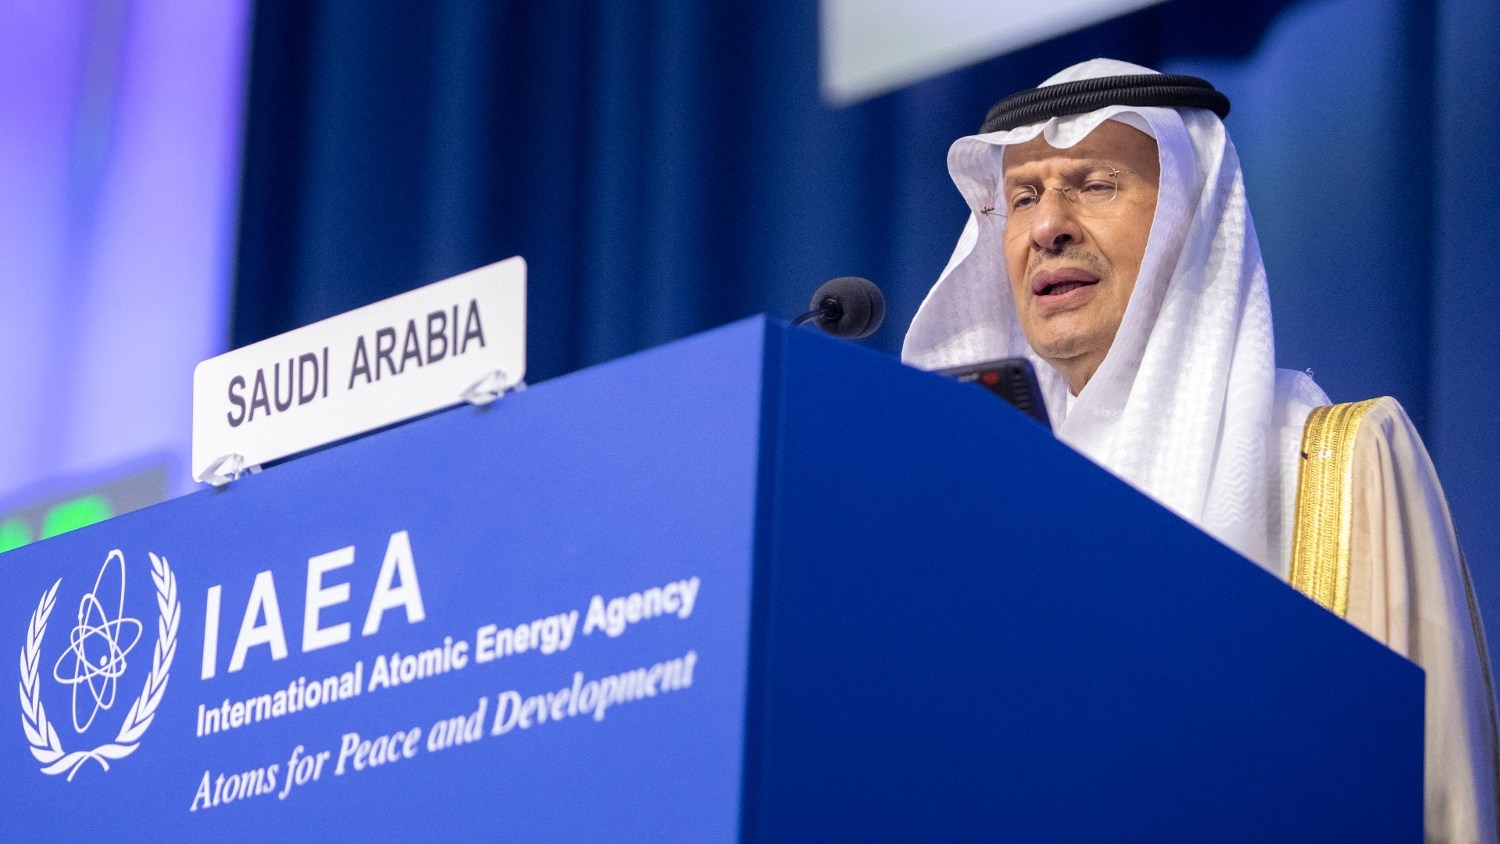 Saudi Arabia's Minister of Energy, Abdulaziz bin Salman, speaks during the 67th International Atomic Energy Agency General Conference on 25 September 2023.